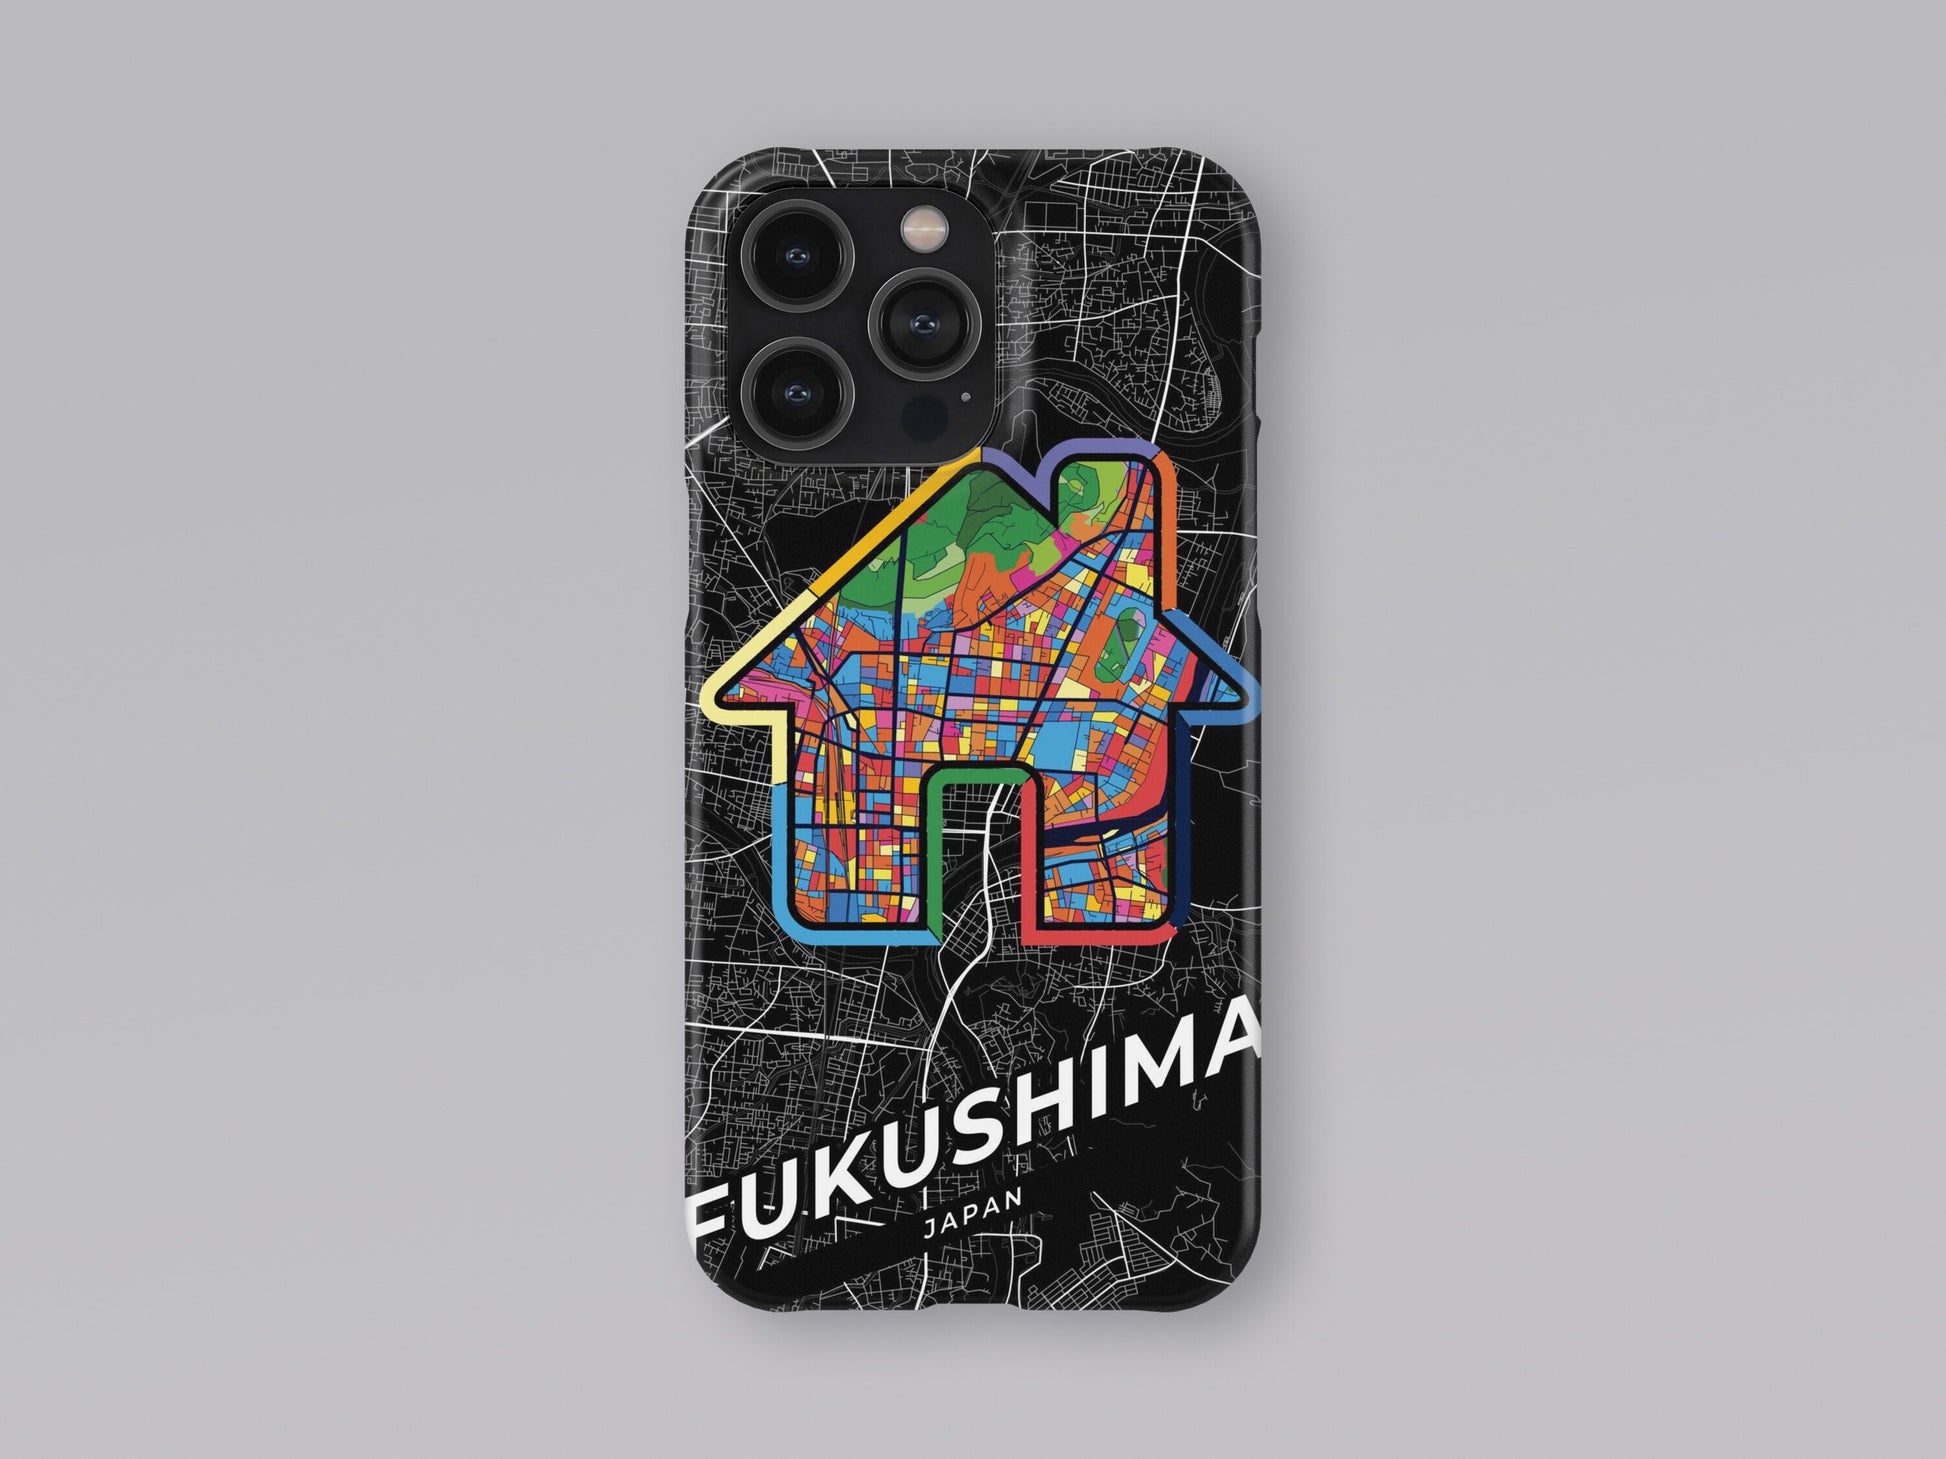 Fukushima Japan slim phone case with colorful icon. Birthday, wedding or housewarming gift. Couple match cases. 3